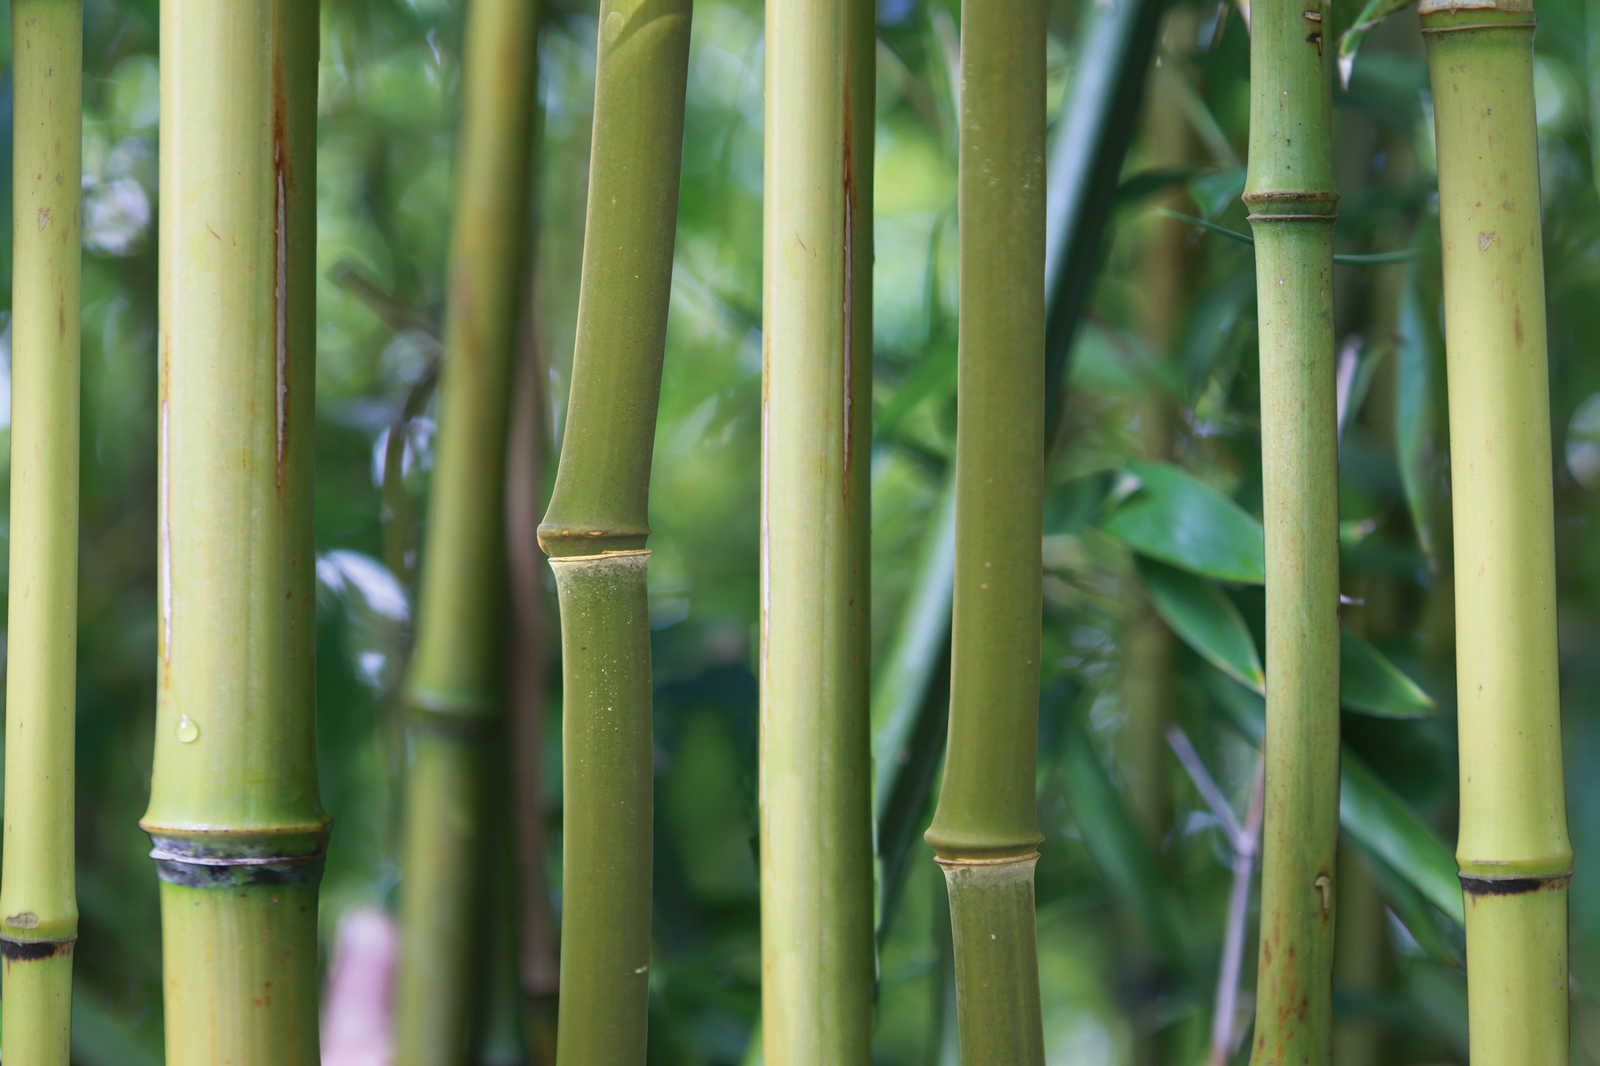             Bambus Leinwandbild Bambuswald mit Detailansicht – 1,20 m x 0,80 m
        